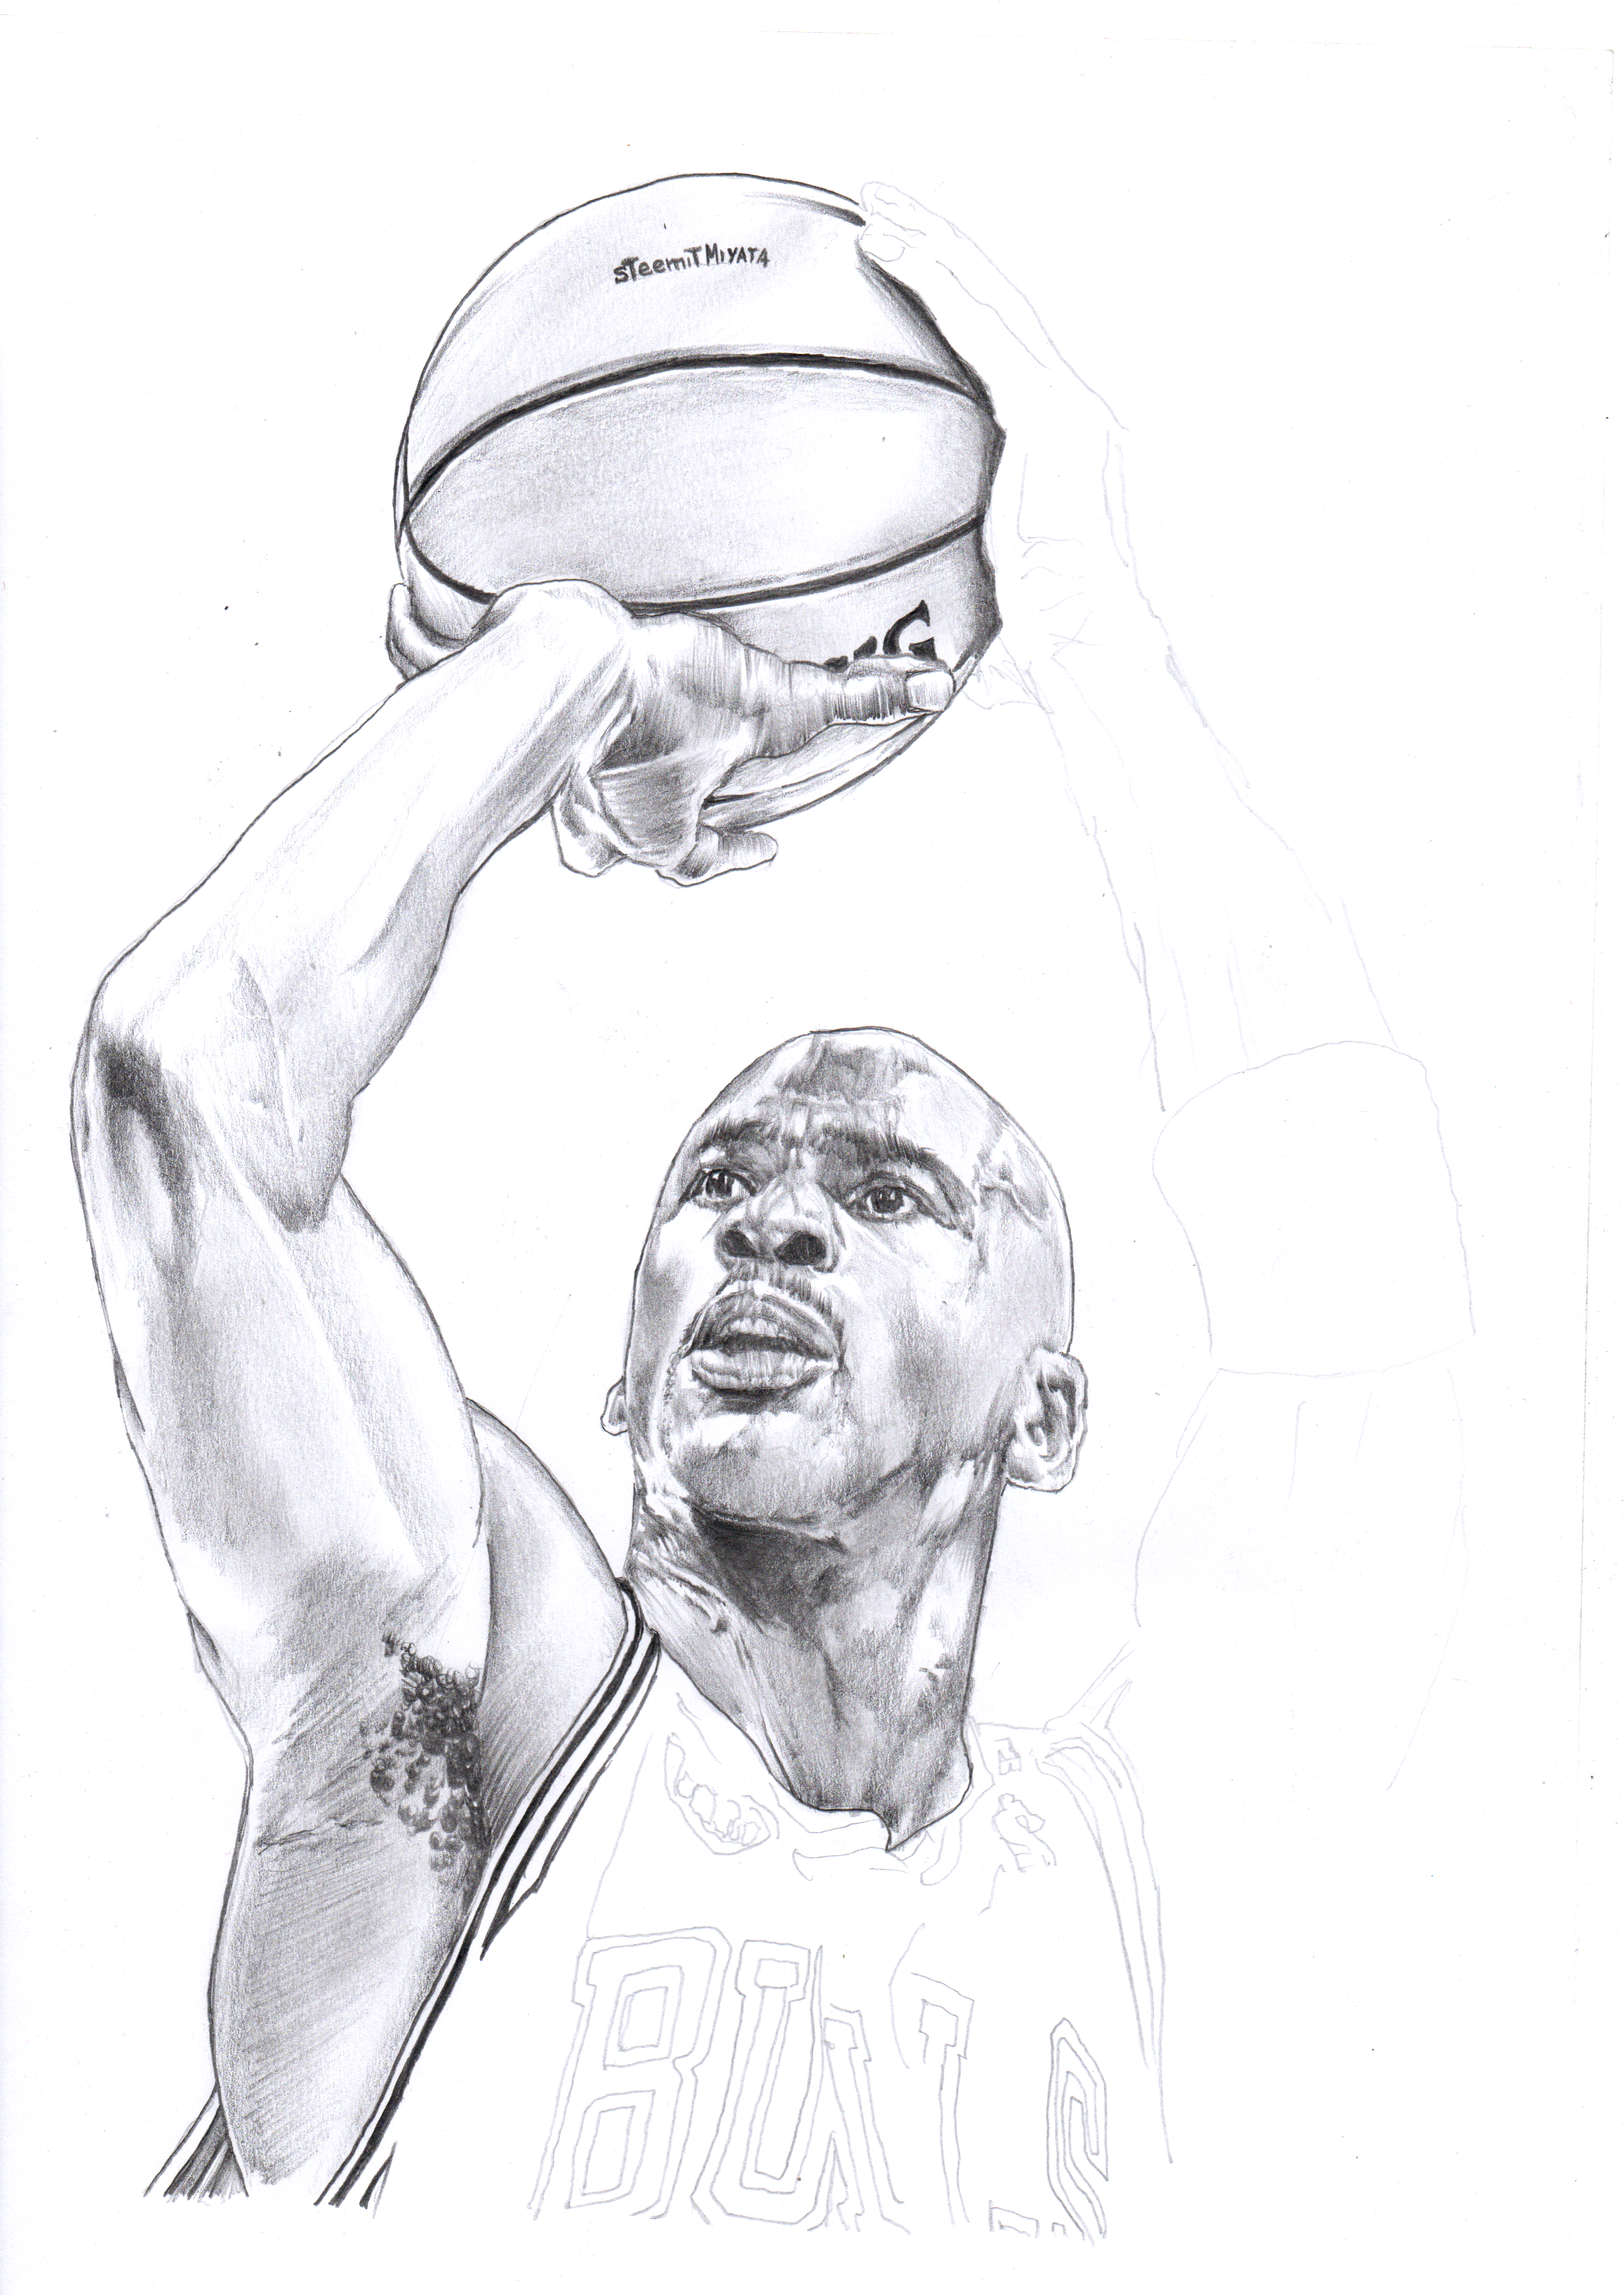 Майкл Джордан баскетболист рисунок карандашом